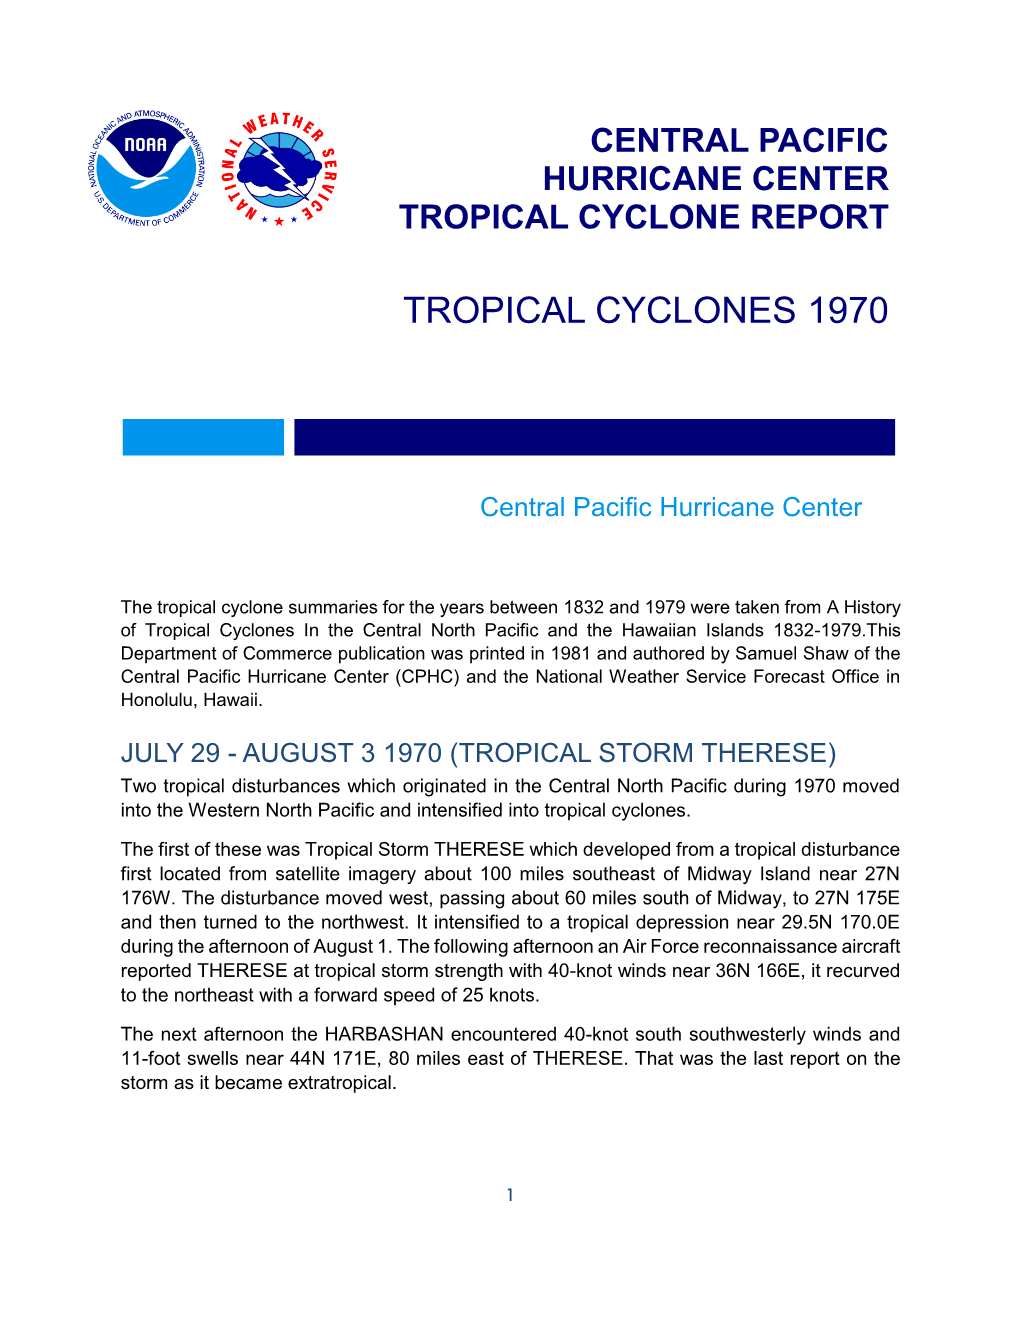 Tropical Cyclones 1970